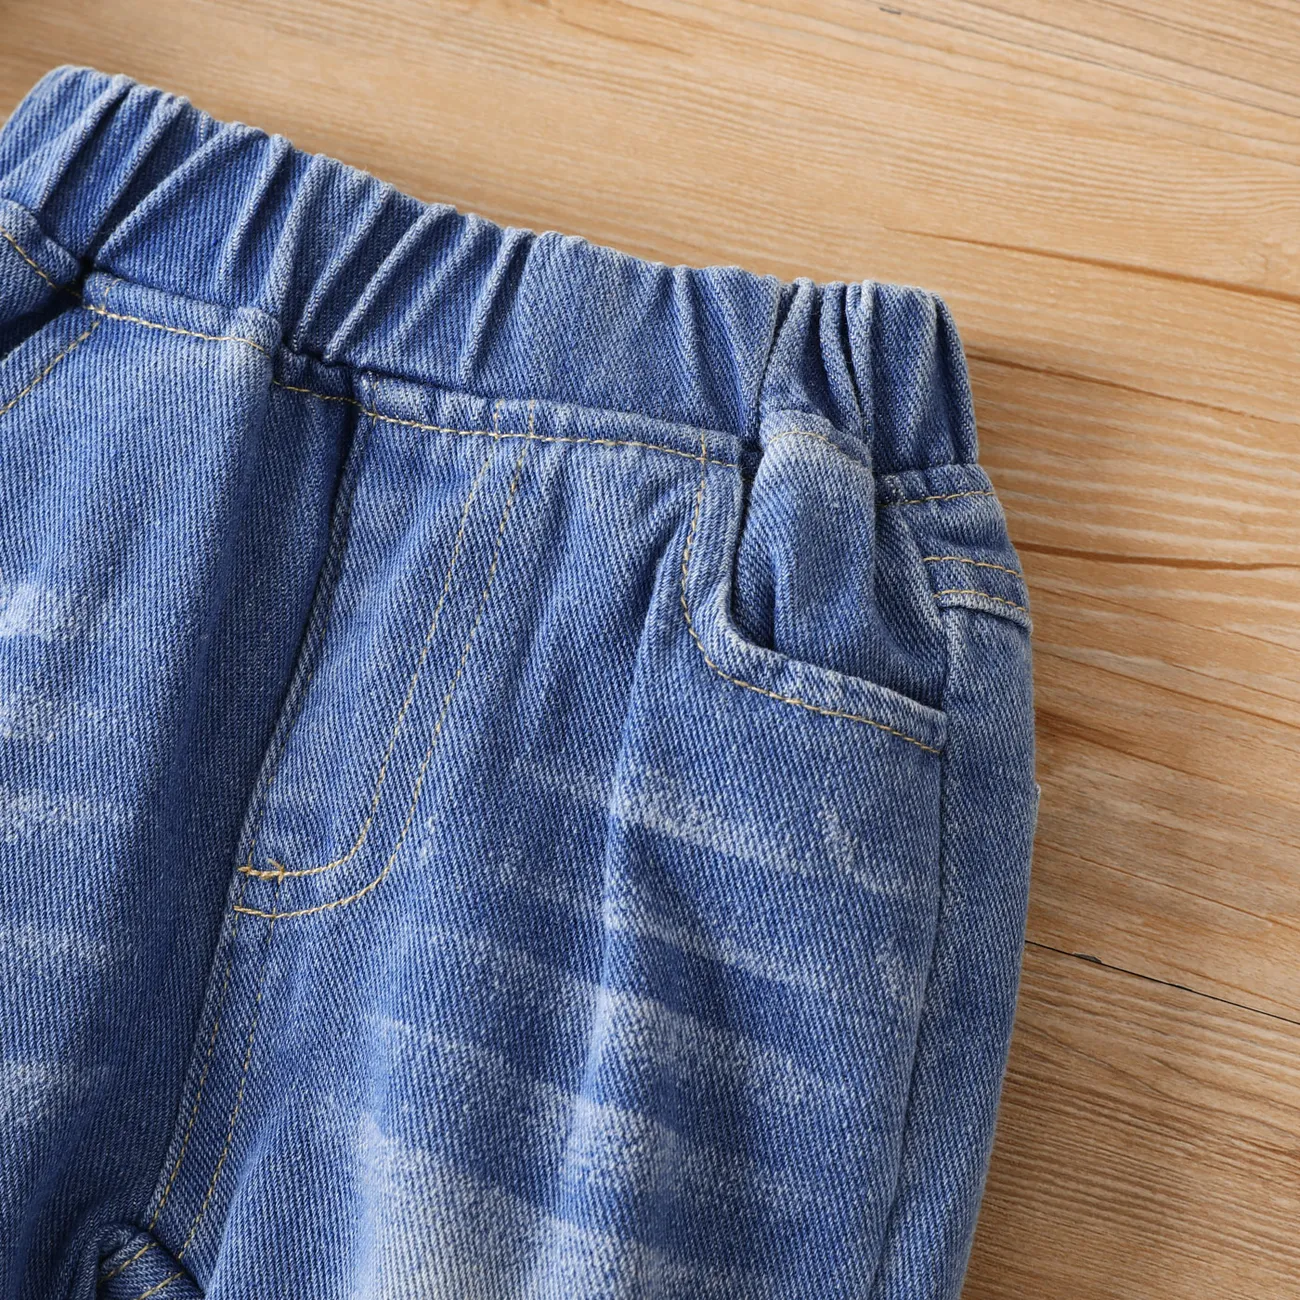 Baby Boy/Girl Basic Ripped Denim Jeans DENIMBLUE big image 1